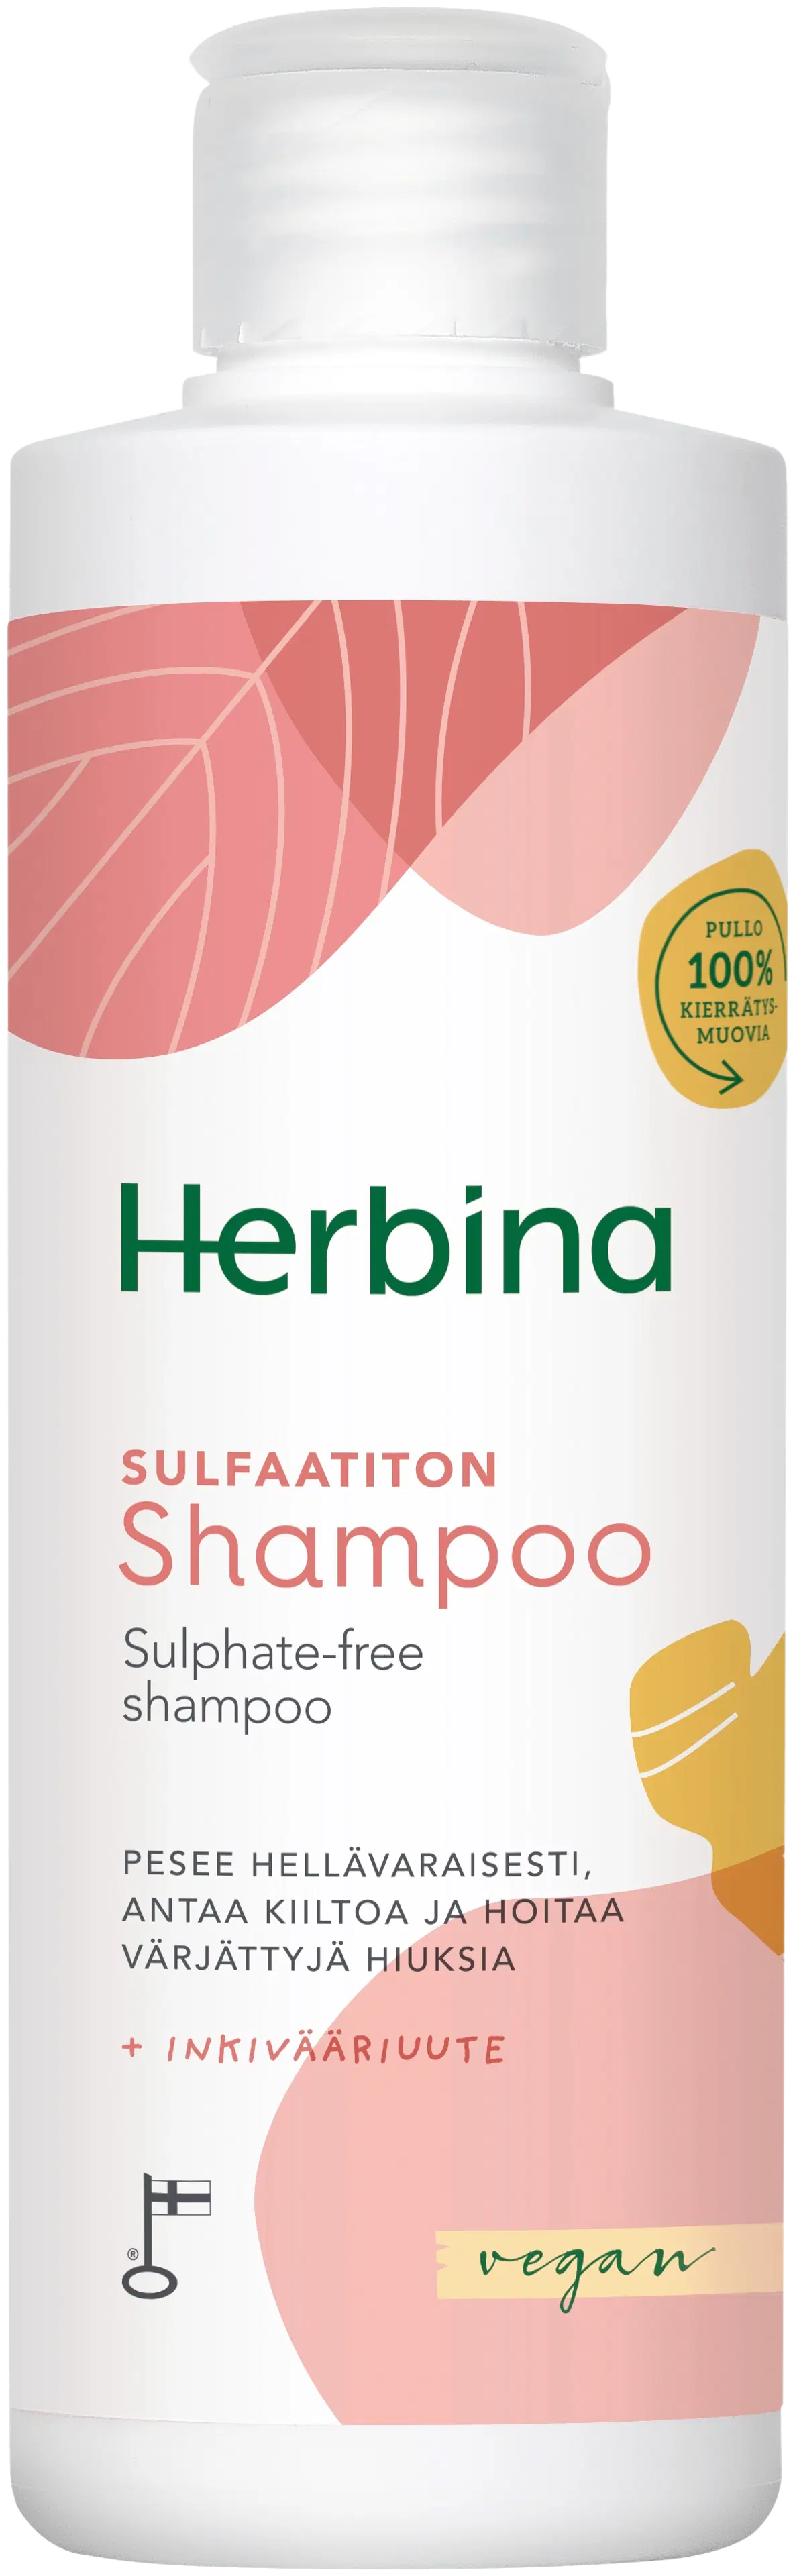 Herbina 250ml Sulfaatiton shampoo 3in1